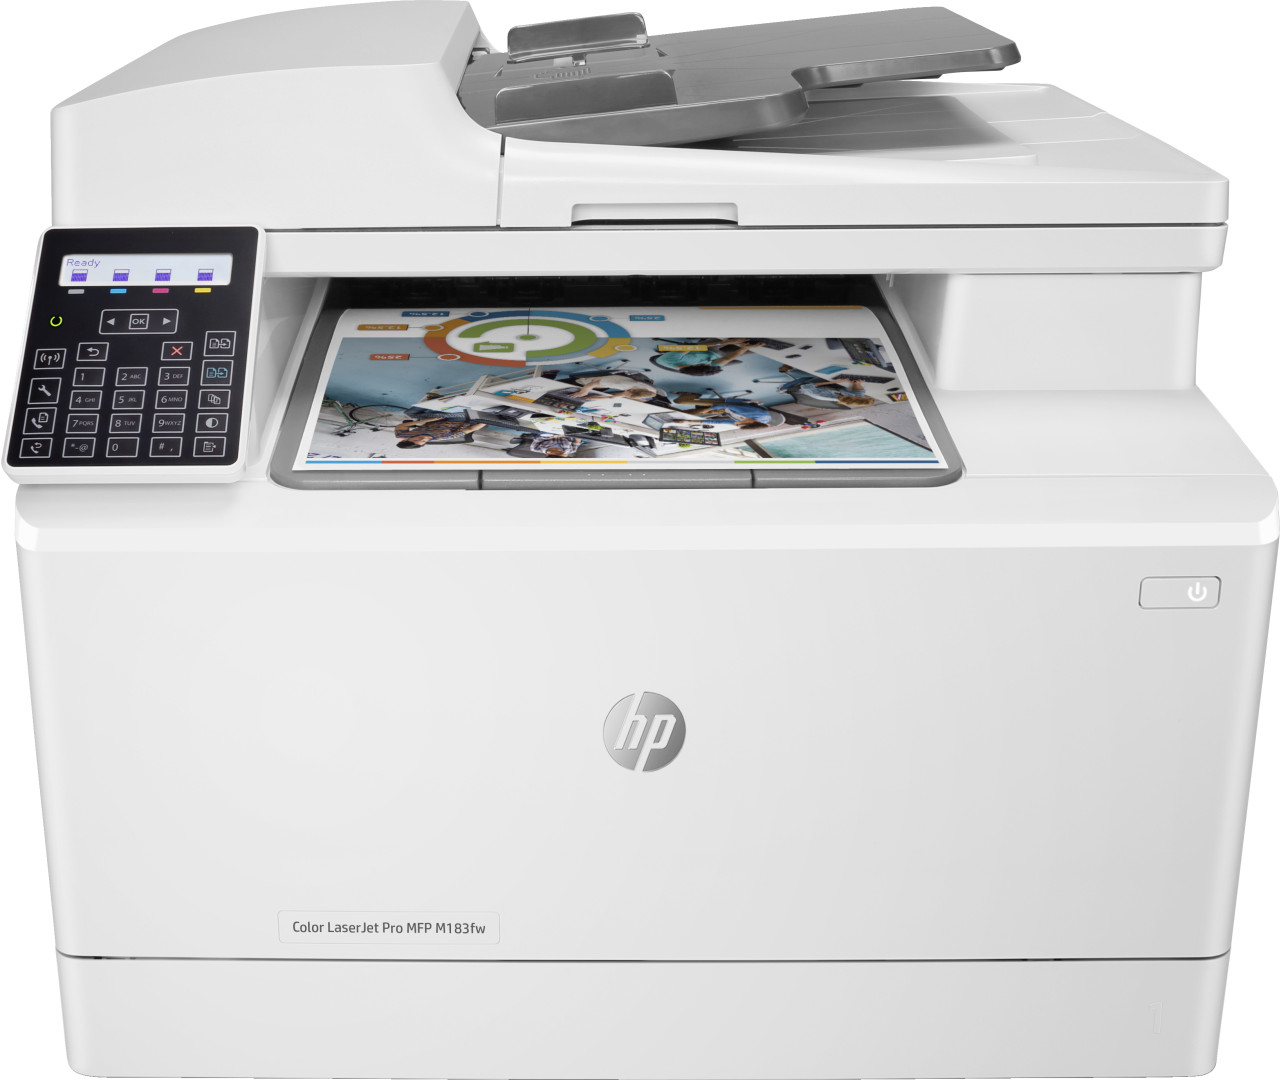 HP Color LaserJet Pro Stampante multifunzione M183fw, Color, Stampante per Stampa, copia, scansione, fax, ADF da 35 fogli; Risparmio energetico; Funzionalit- di sicurezza avanzate; Wi-Fi dual band